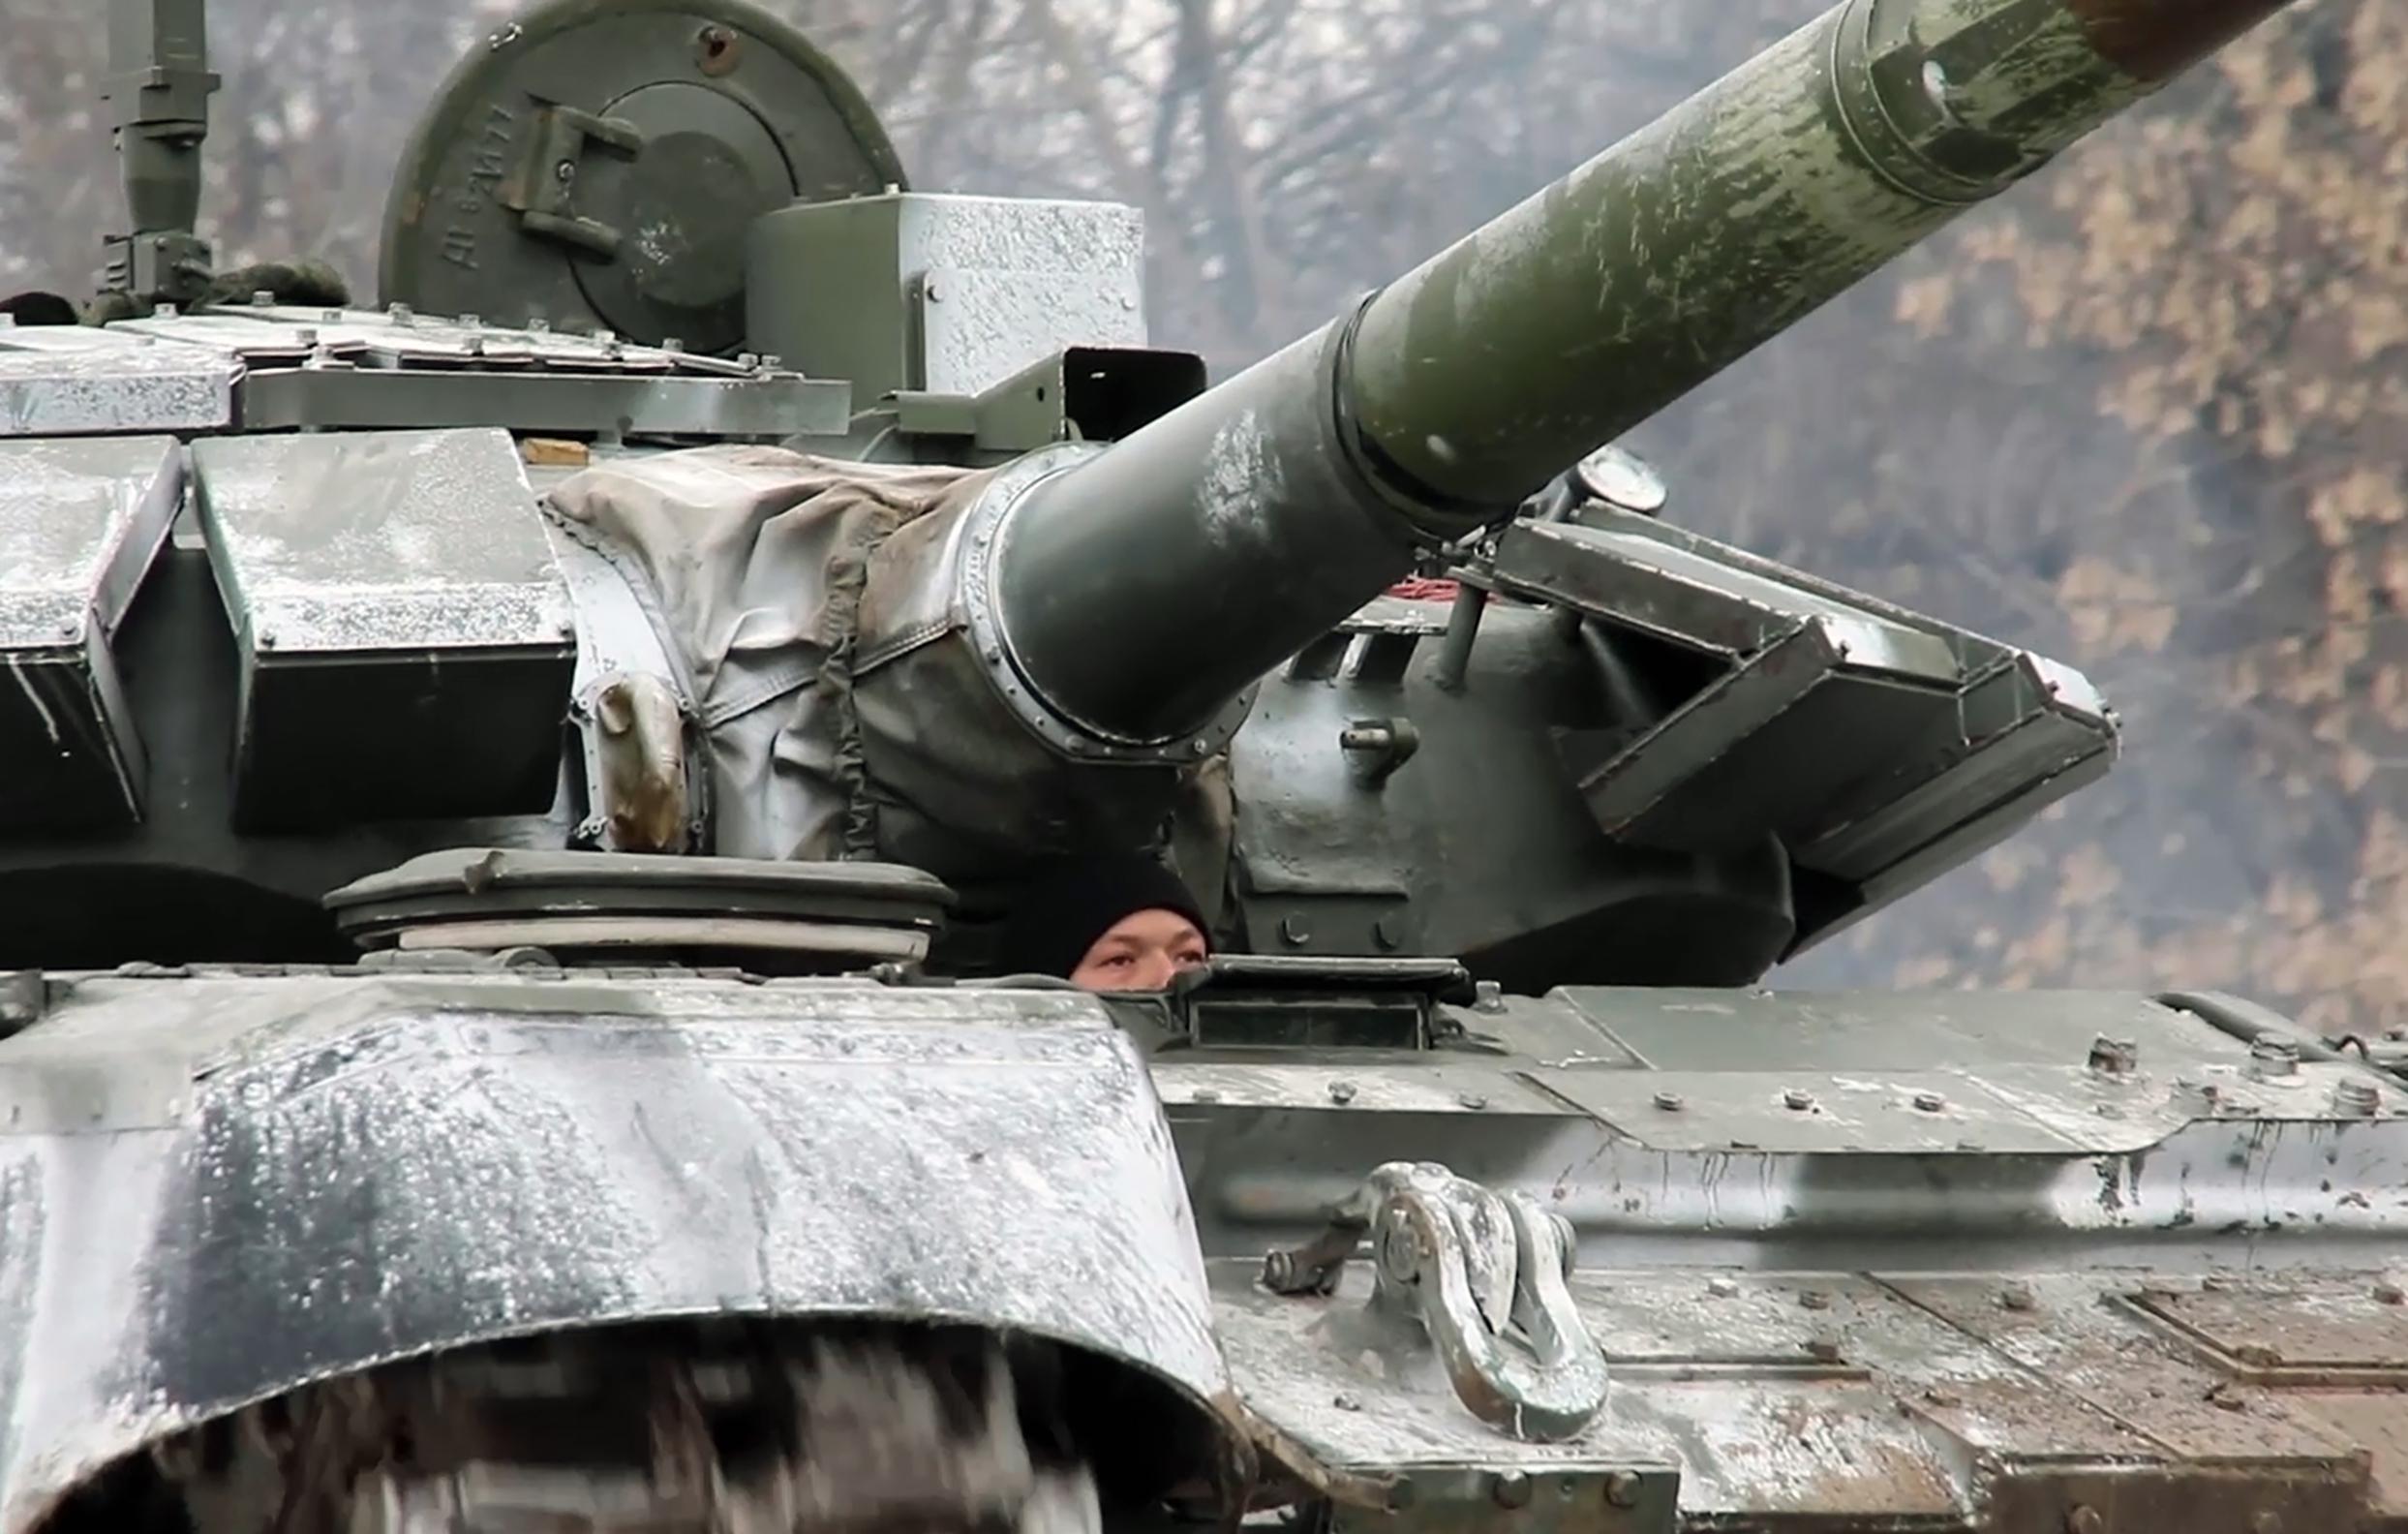 Guerra Ucraina, tank Russia senza benzina: guasto o ammutinamento?